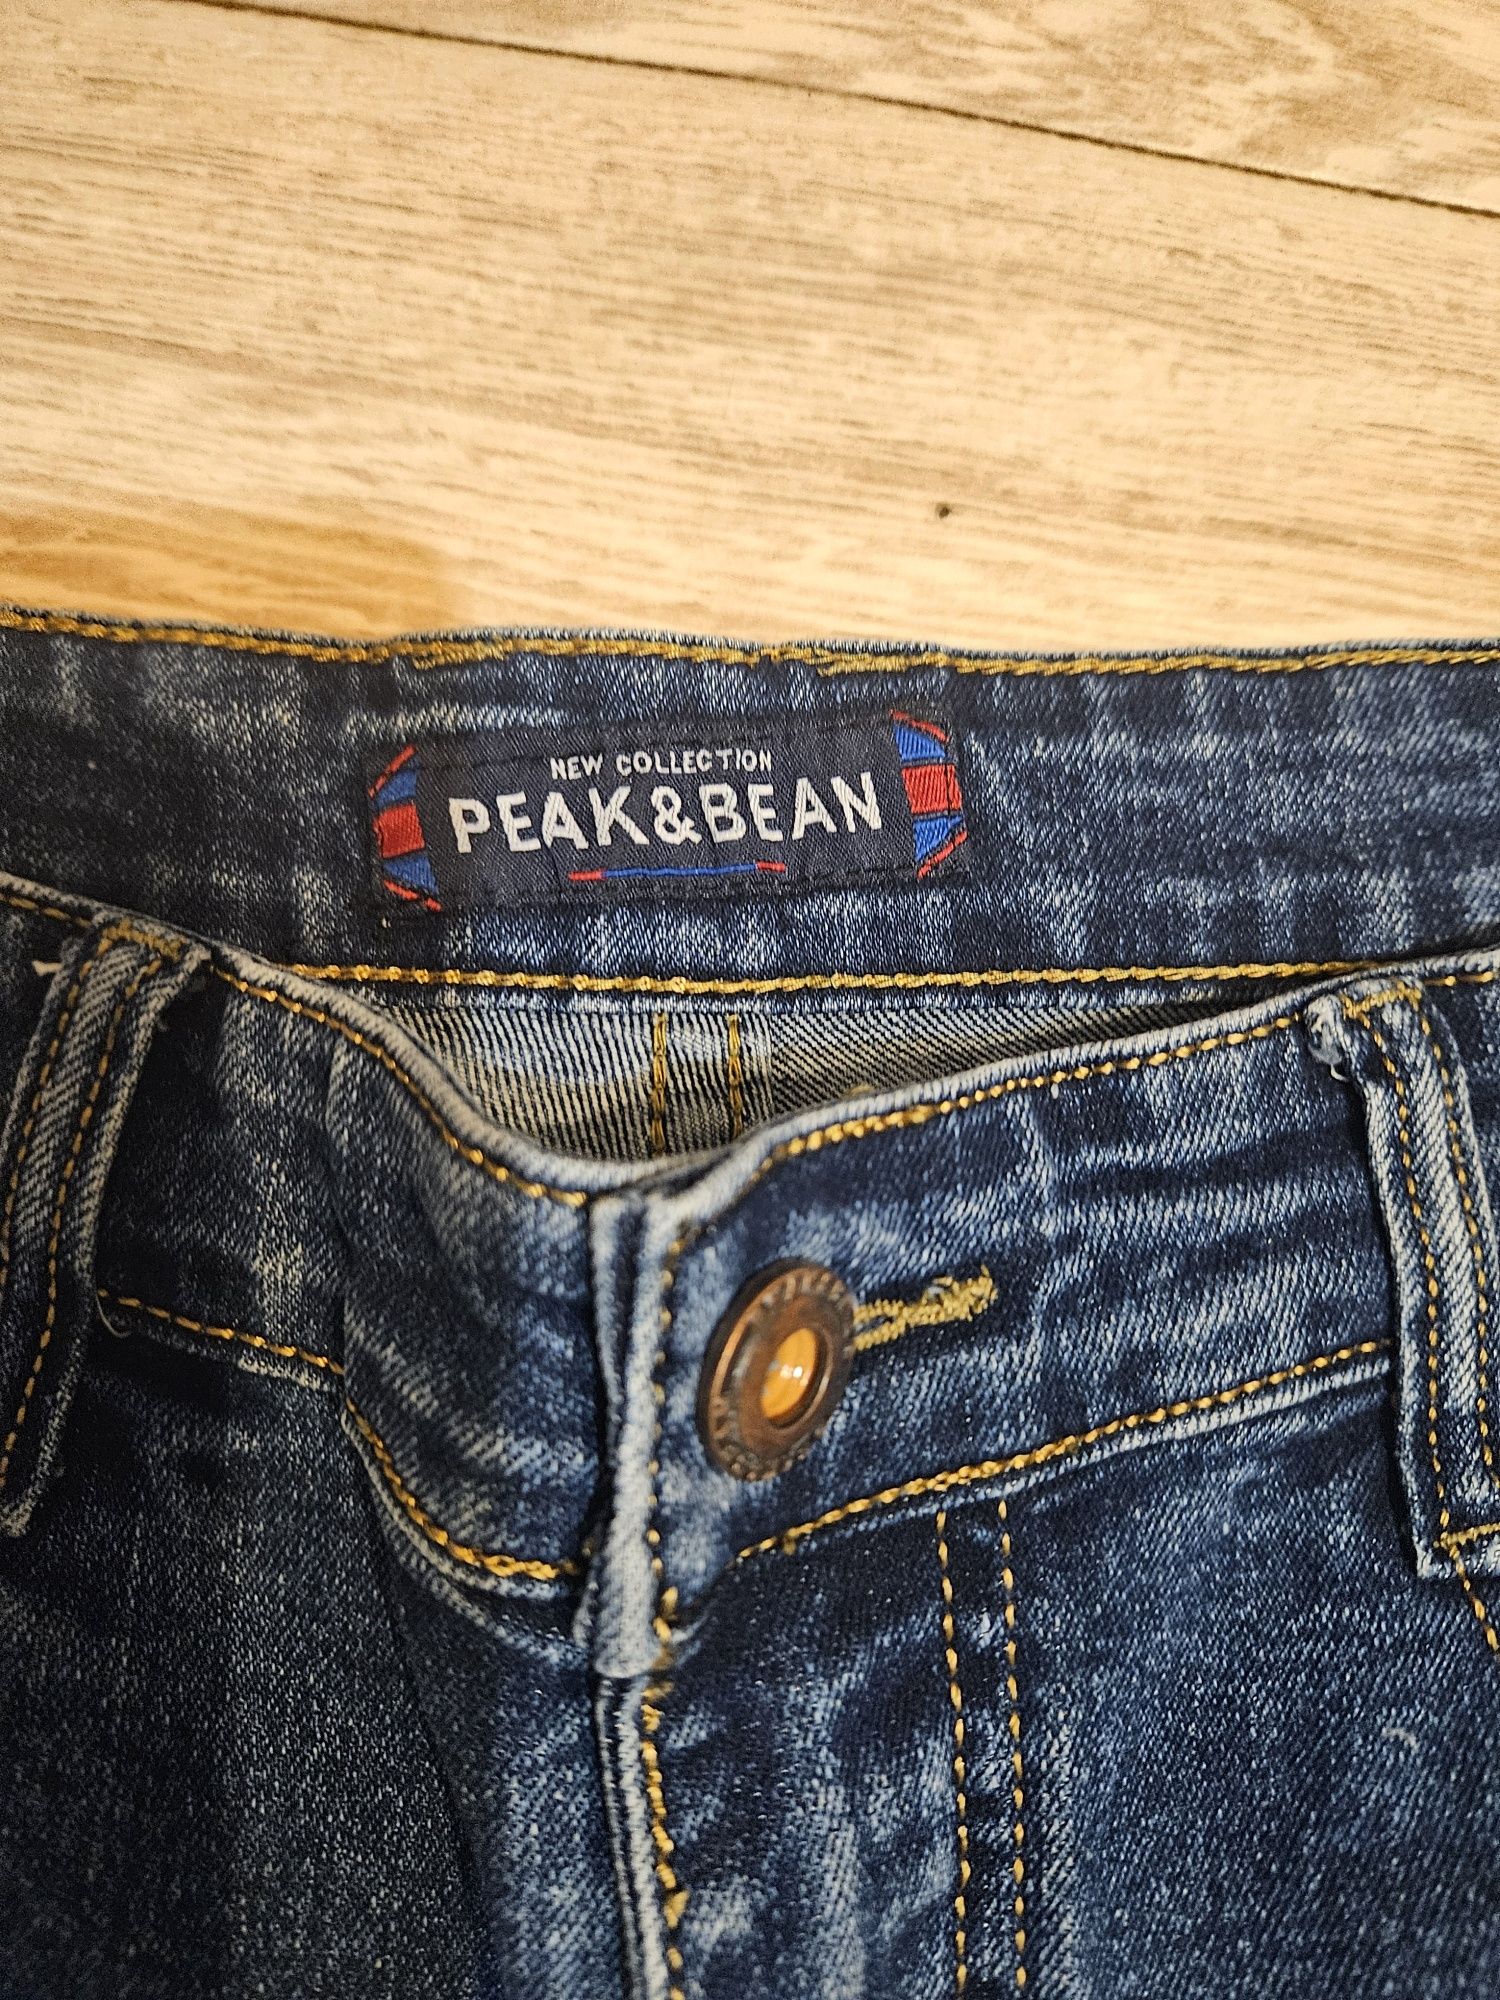 Spodnie jeansy Peak&Bean rozmiar 33